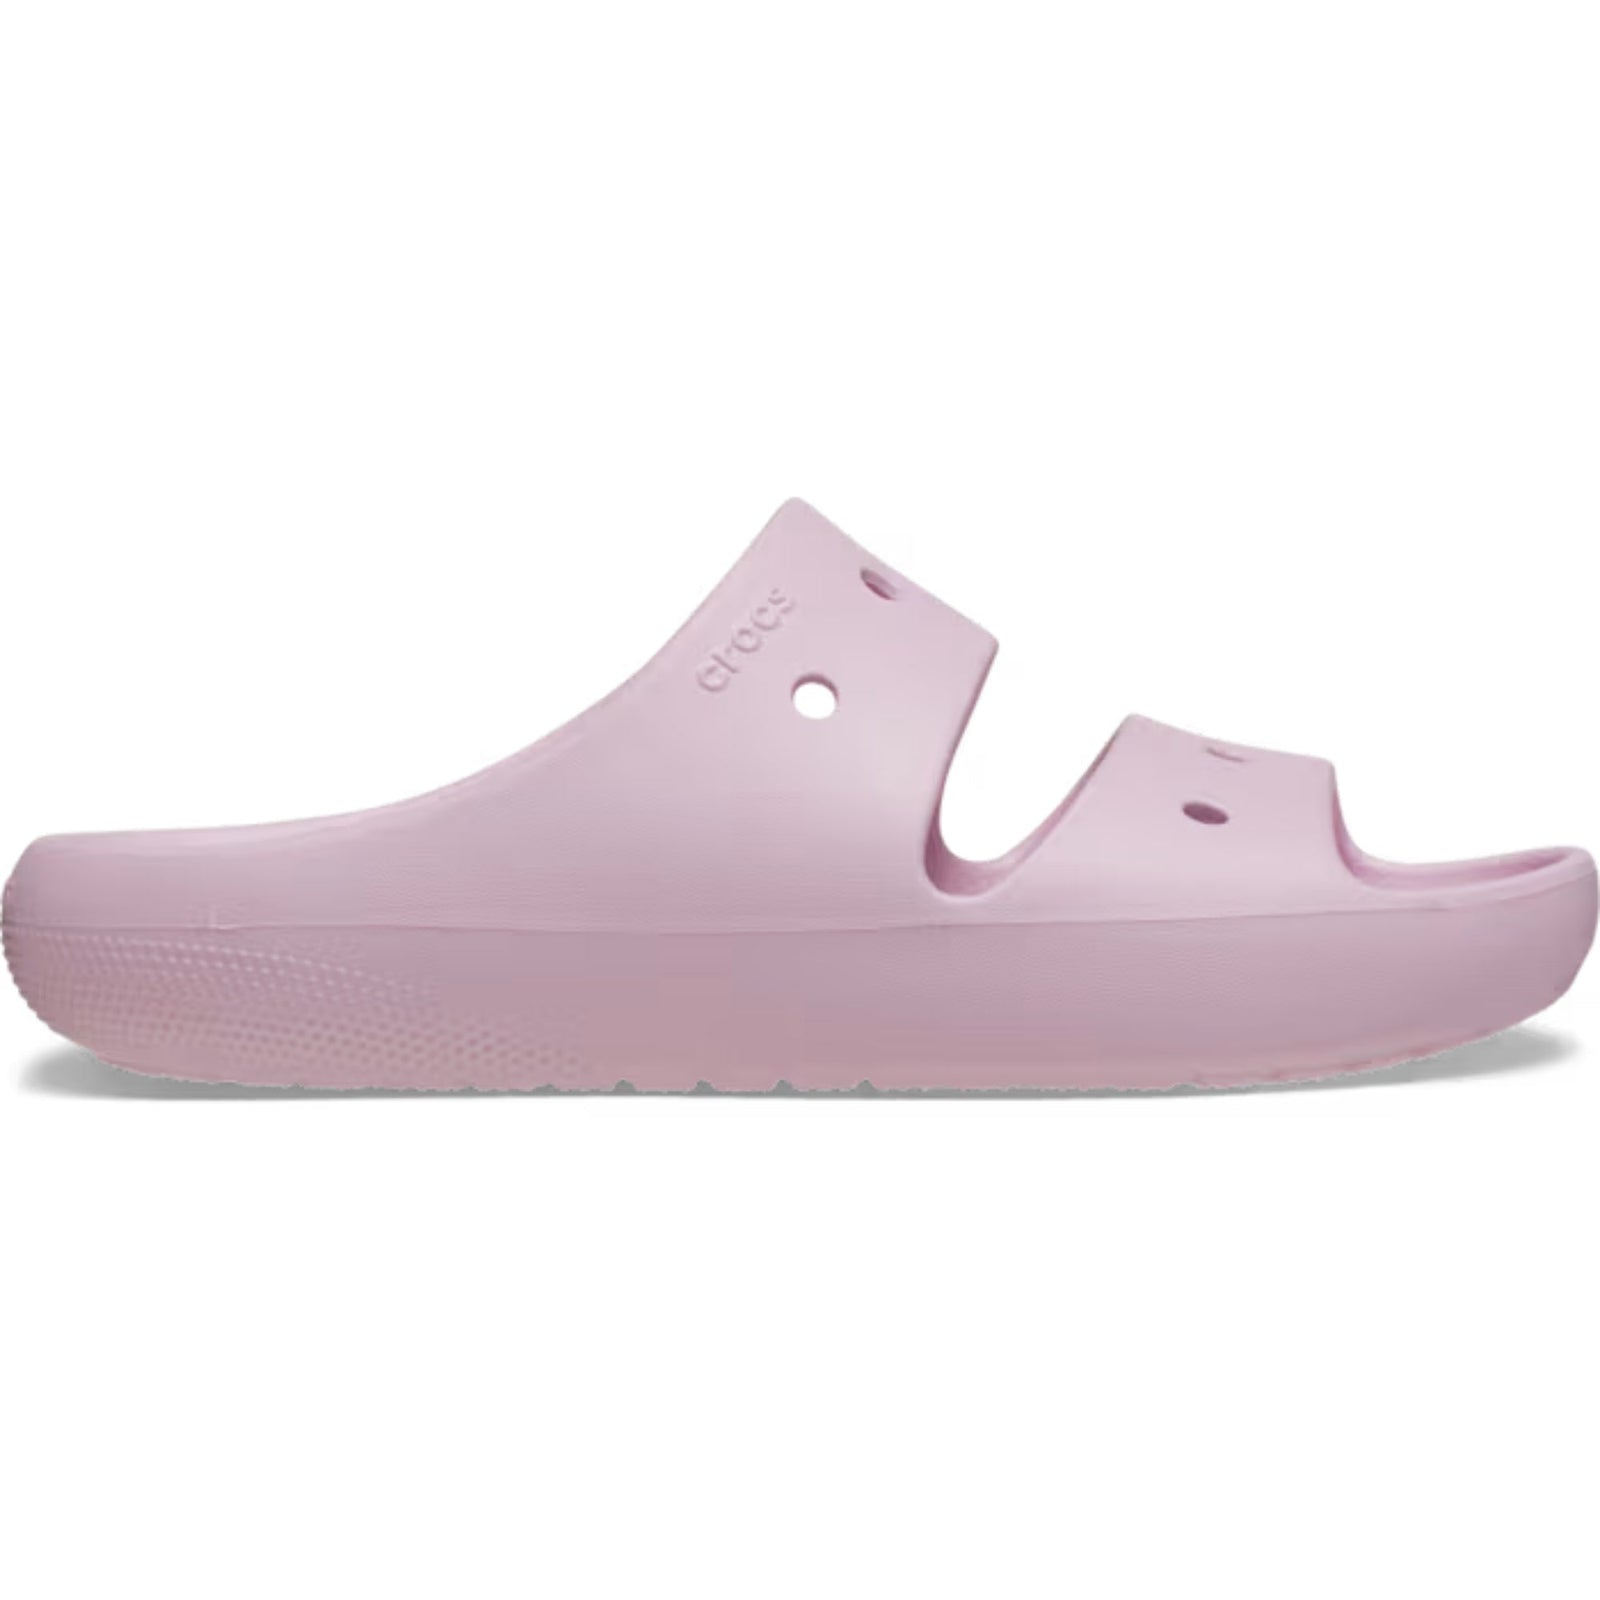 Crocs Classic Sandal in Ballerina Pink